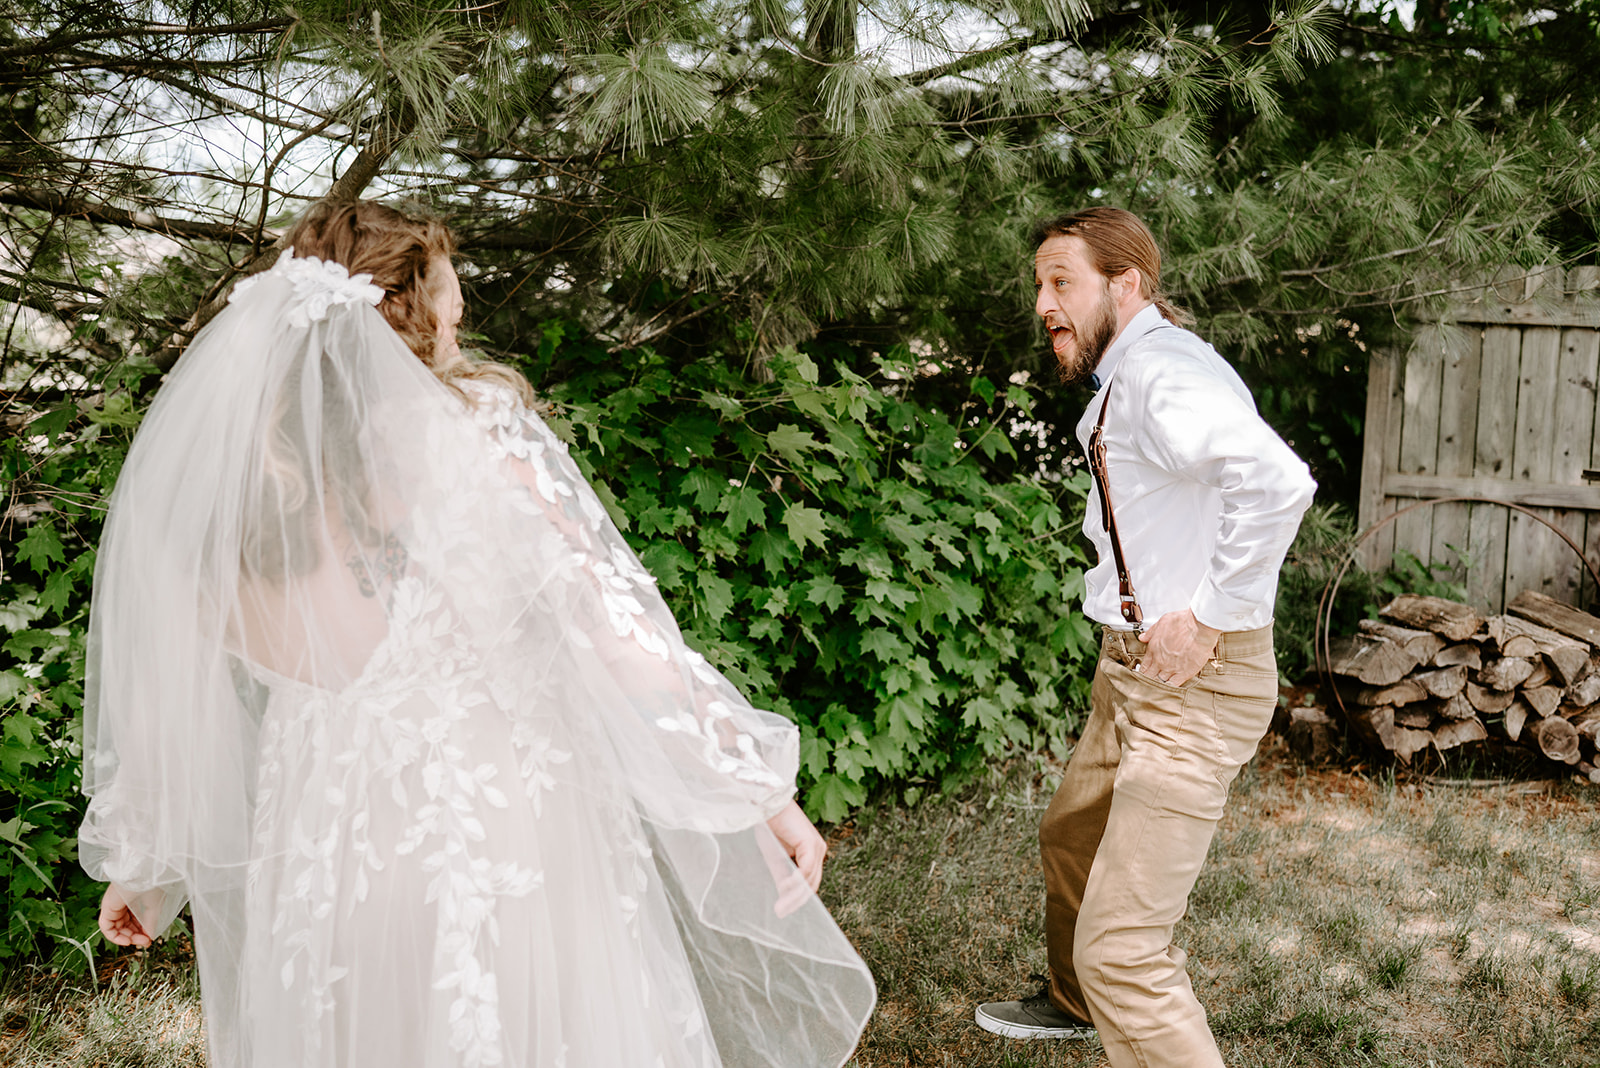 District 5 Schoolhouse, Zeeland, MI Wedding, smoke friendly,  Michigan Wedding Photographer, Liv lyszyk Wedding Photography